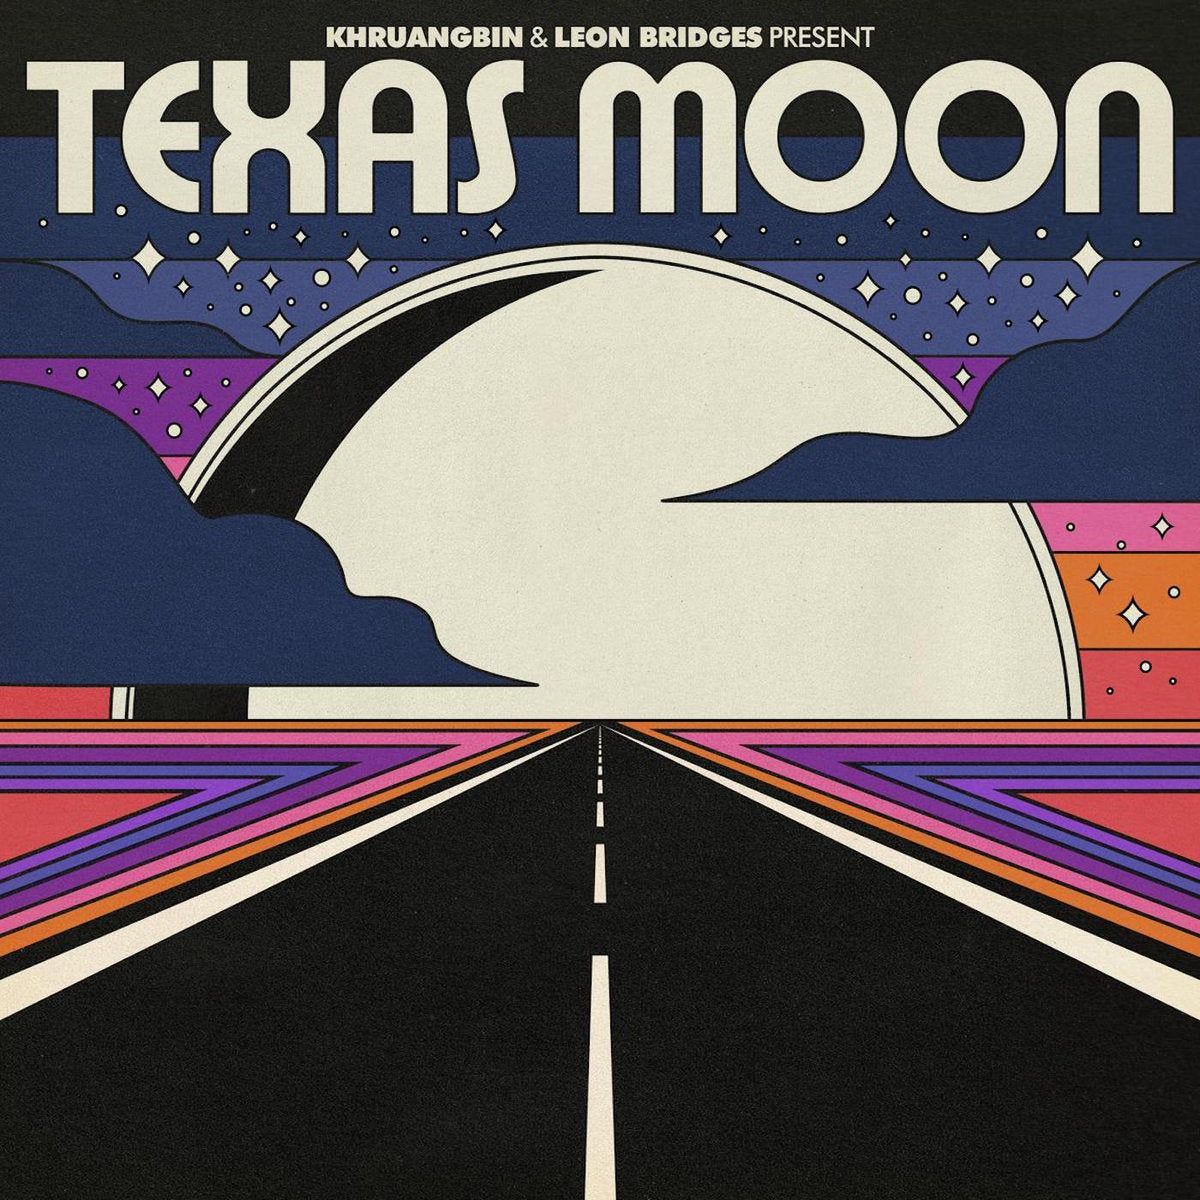 Khruangbin & Leon Bridges - Texas Moon - LP